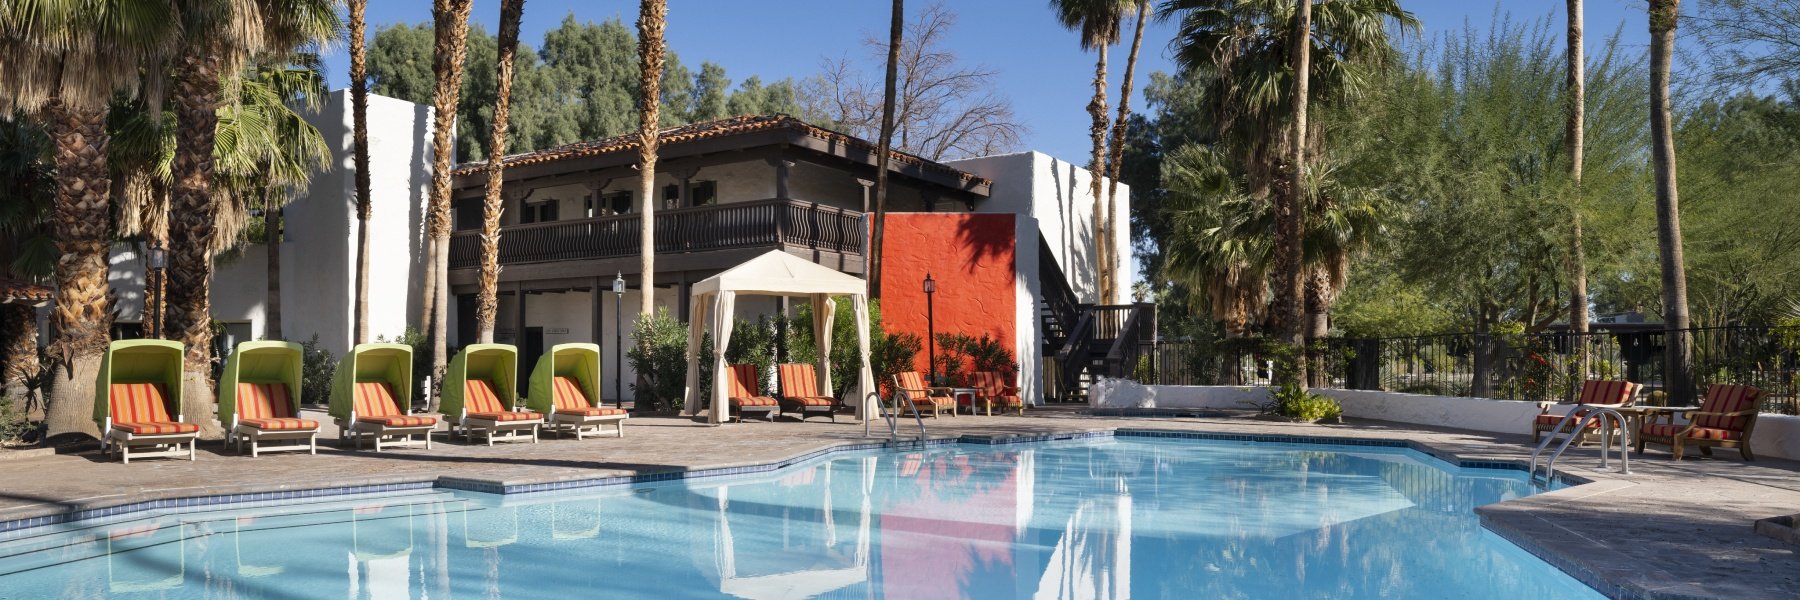 Amenities at La Casa Del Zorro Resort & Spa, Borrego Springs California